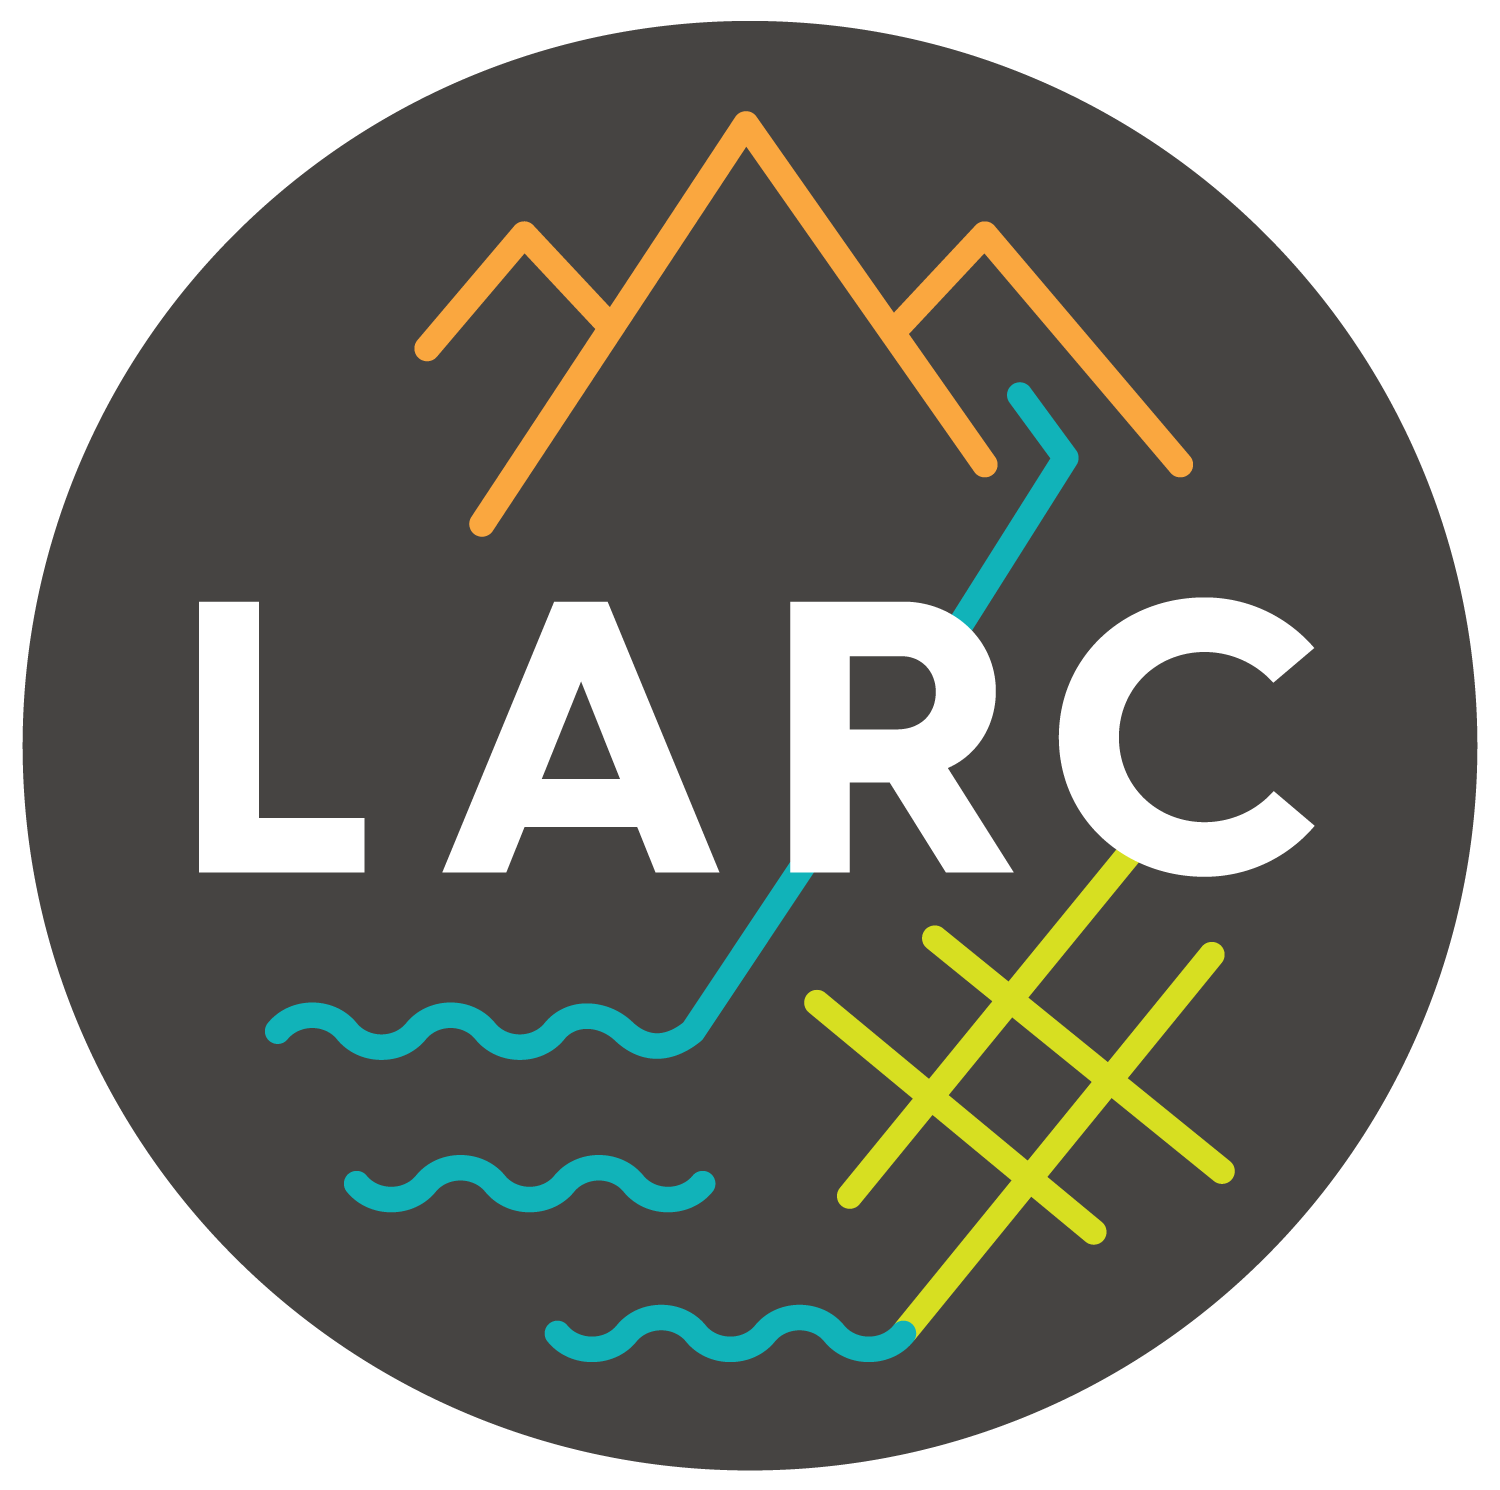 larc_logo_web copy.png